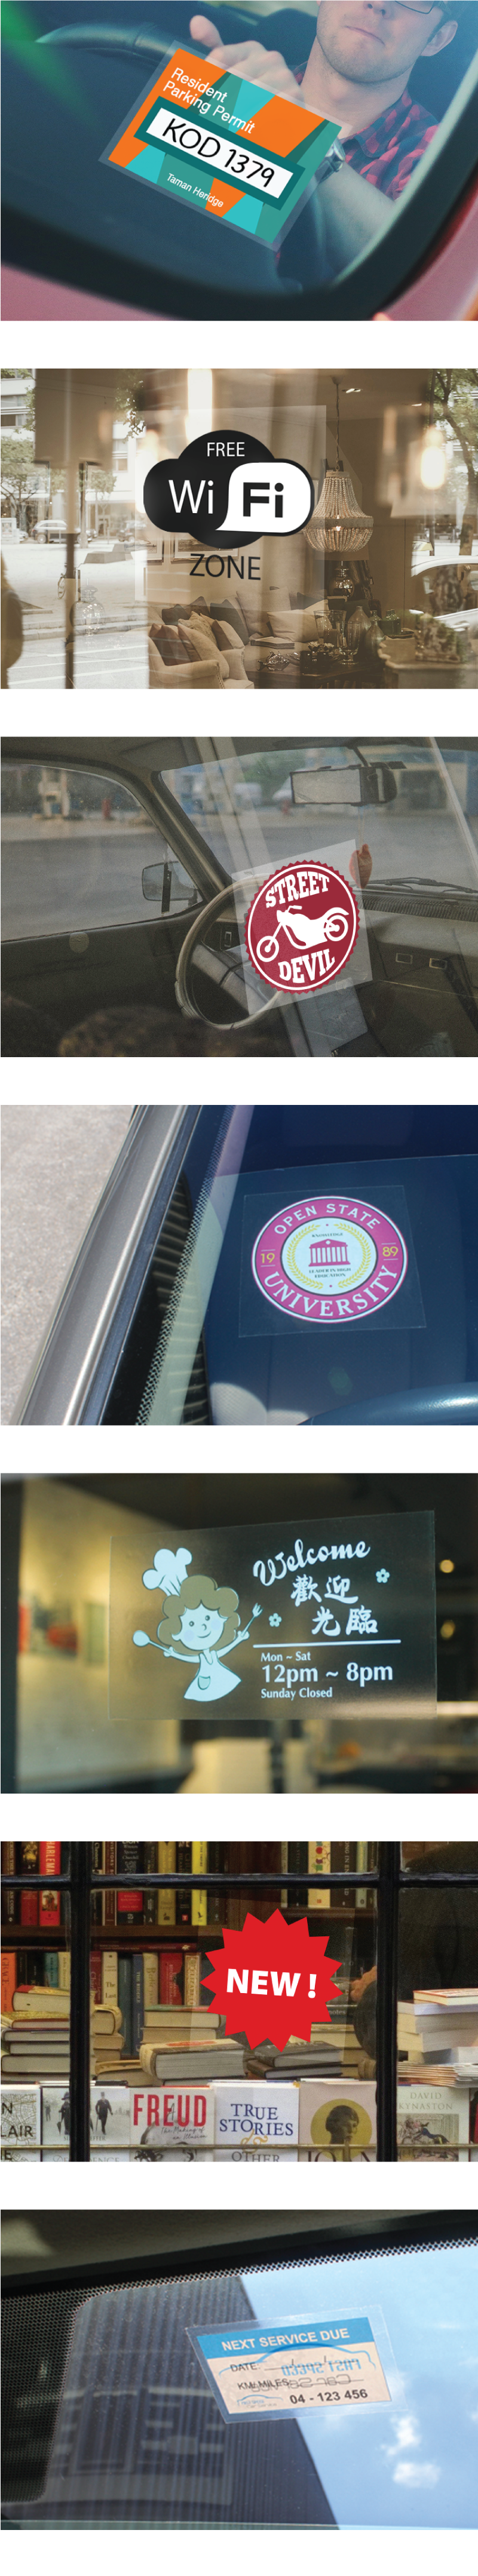 jentayu design static cling window car sticker